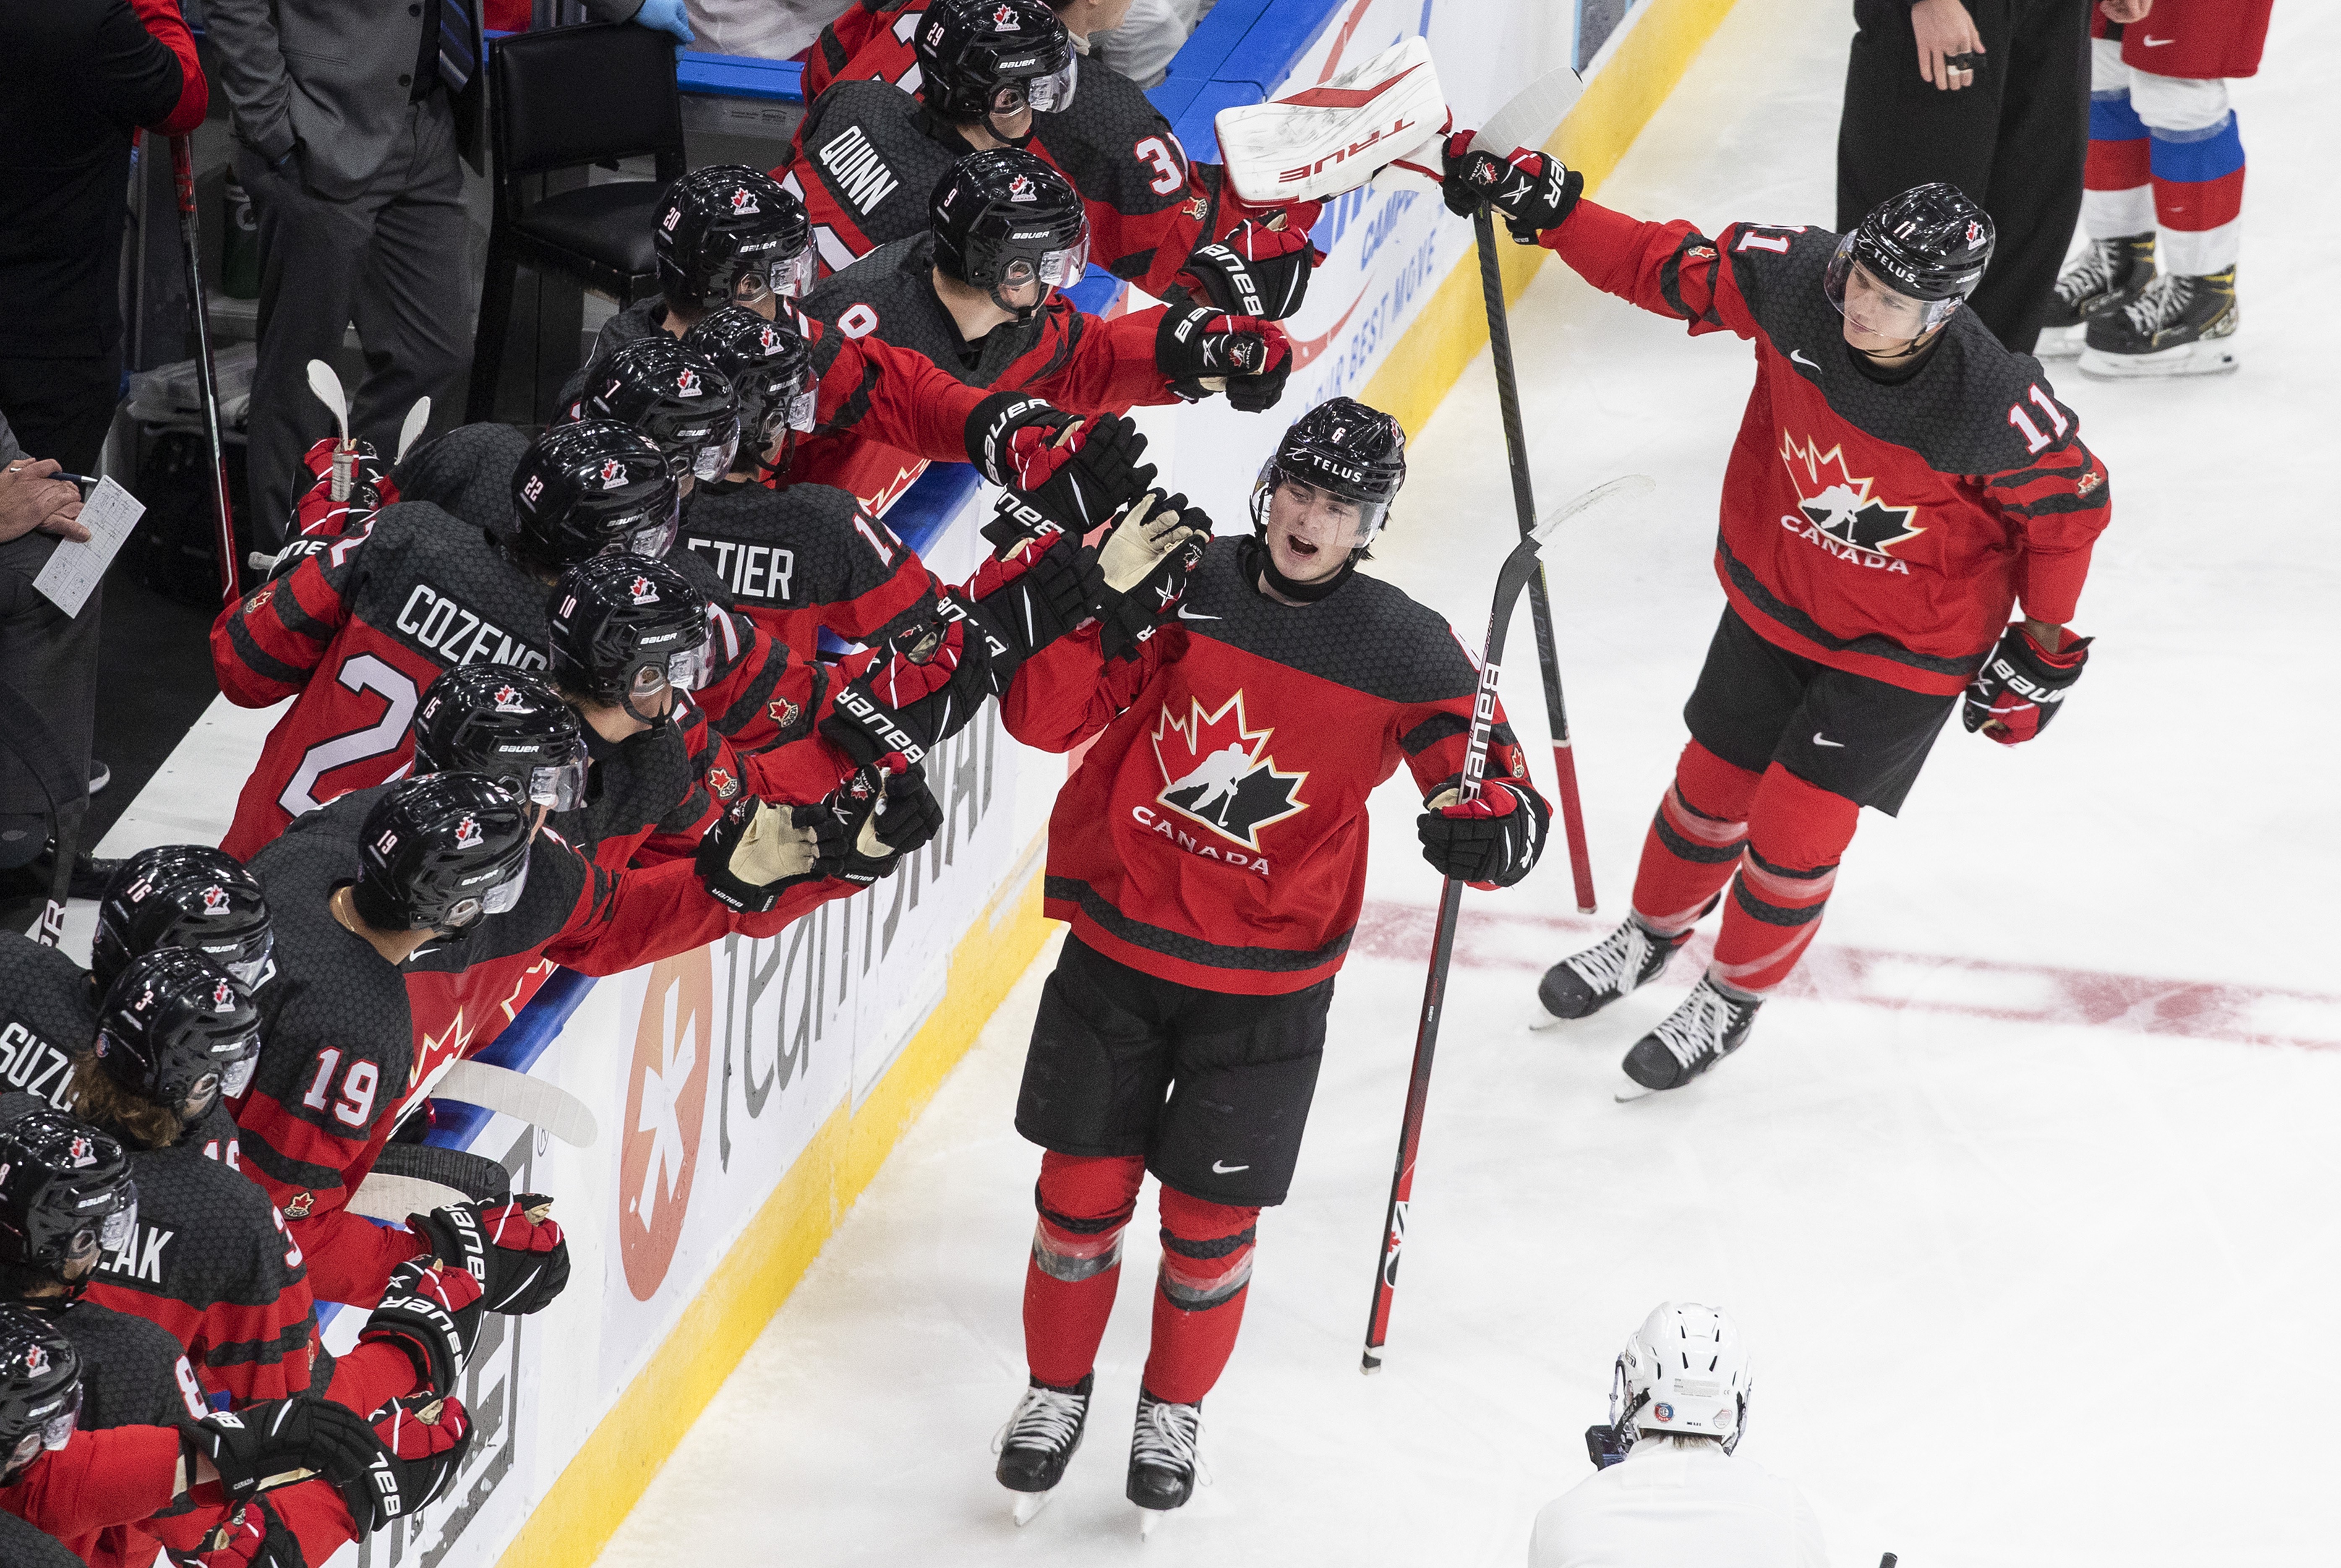 Halifax and Moncton to host 2023 world junior hockey championship